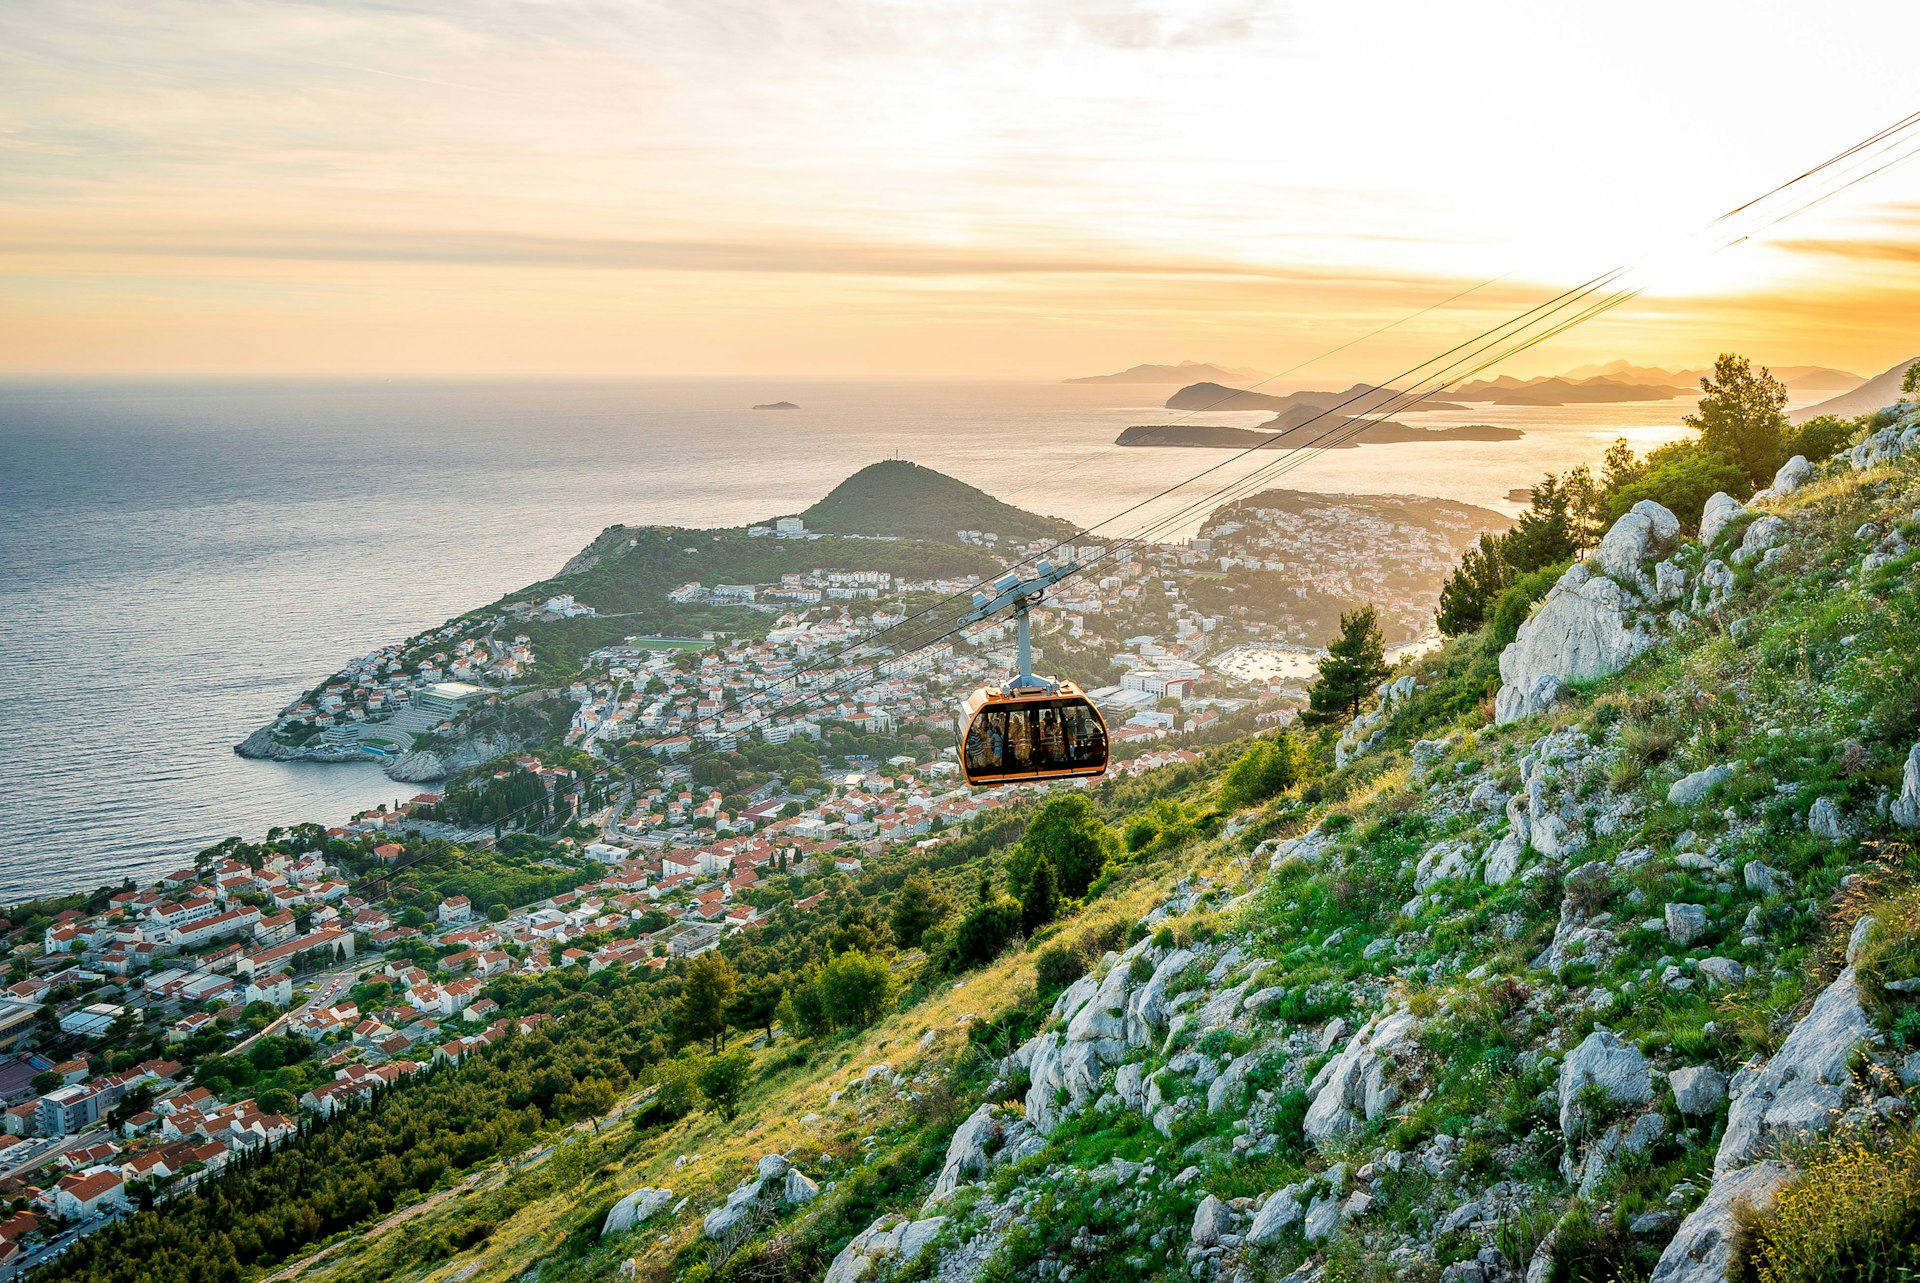 The Dubrovnik cable car descends Srd hill during sunset